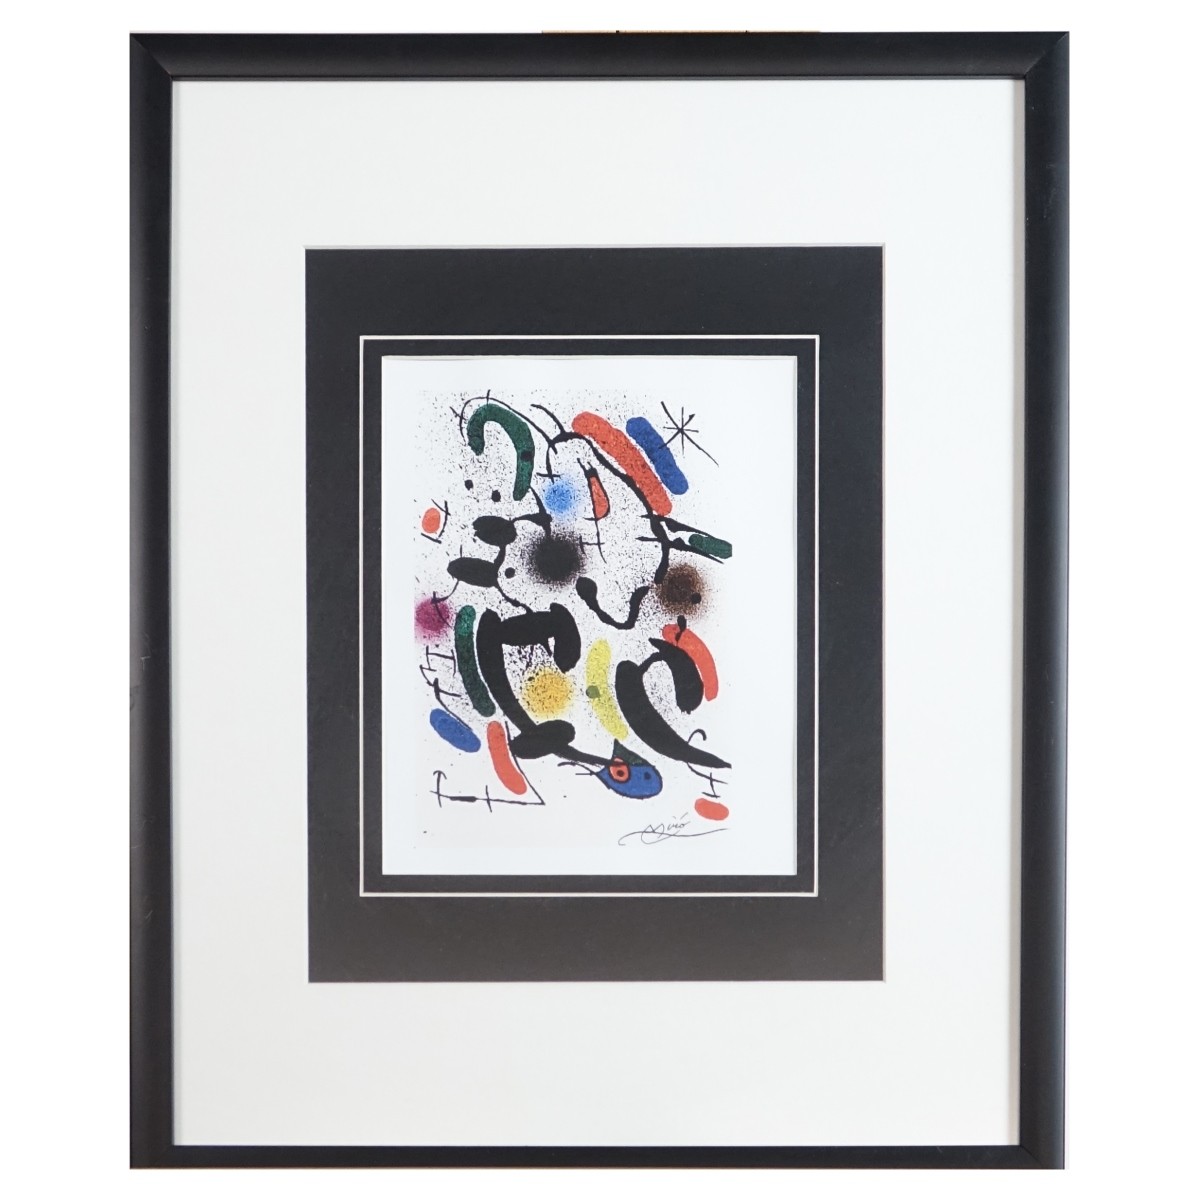 After: Joan Miro, Spanish (1893 - 1983)